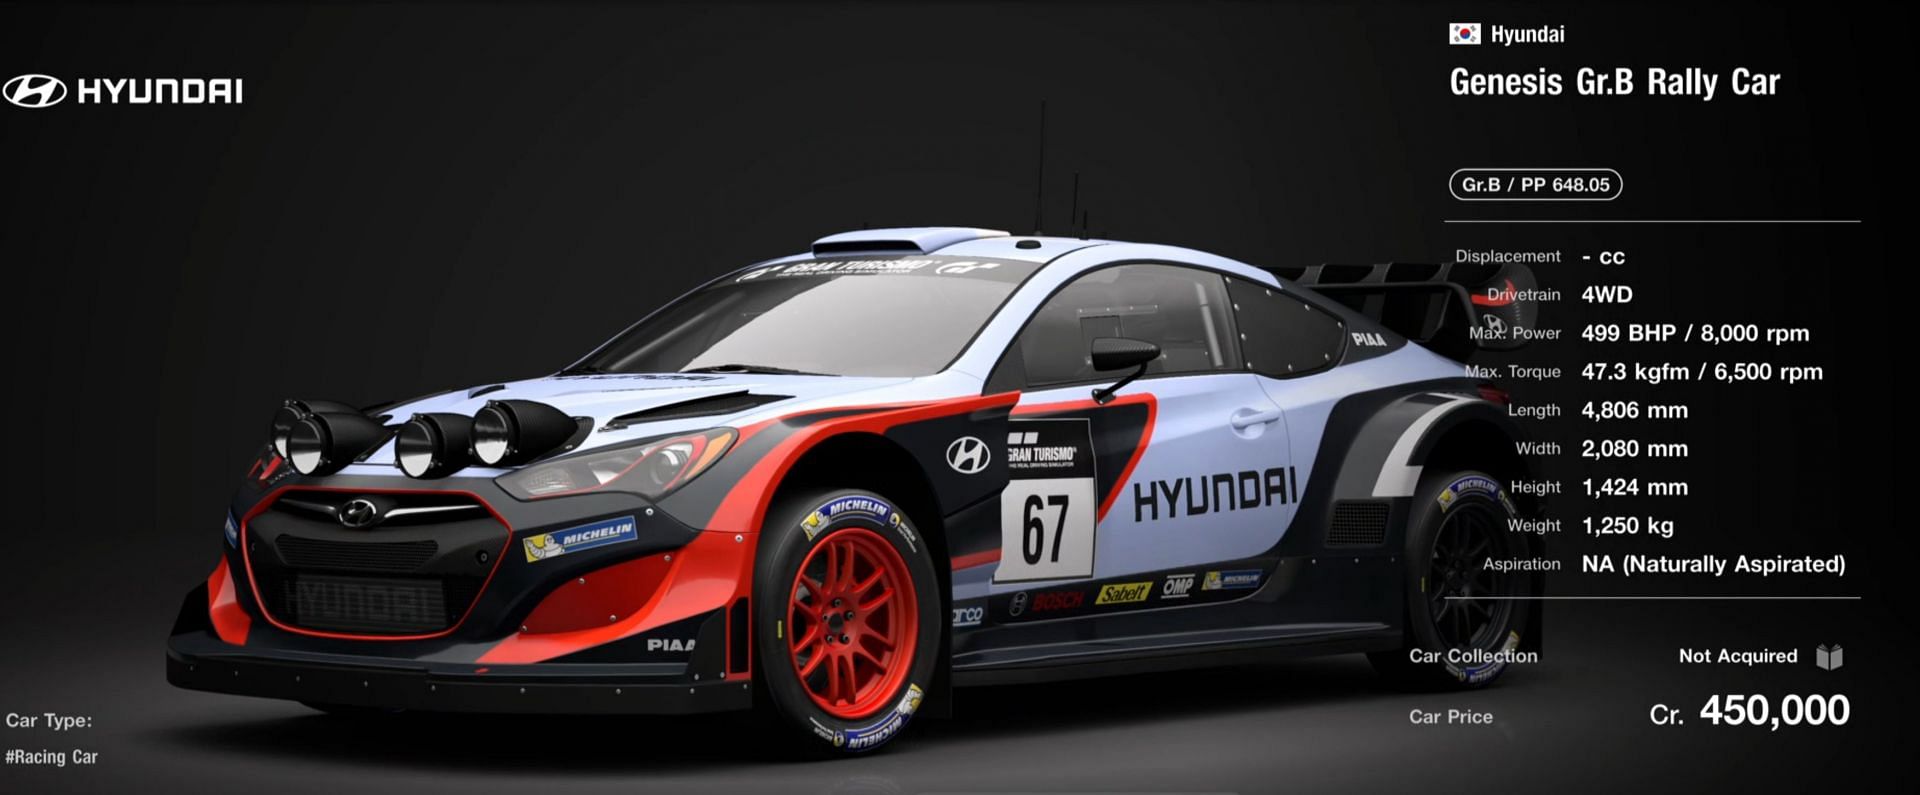 Hyundai sure knows how to design a rally car (Image via Sony)